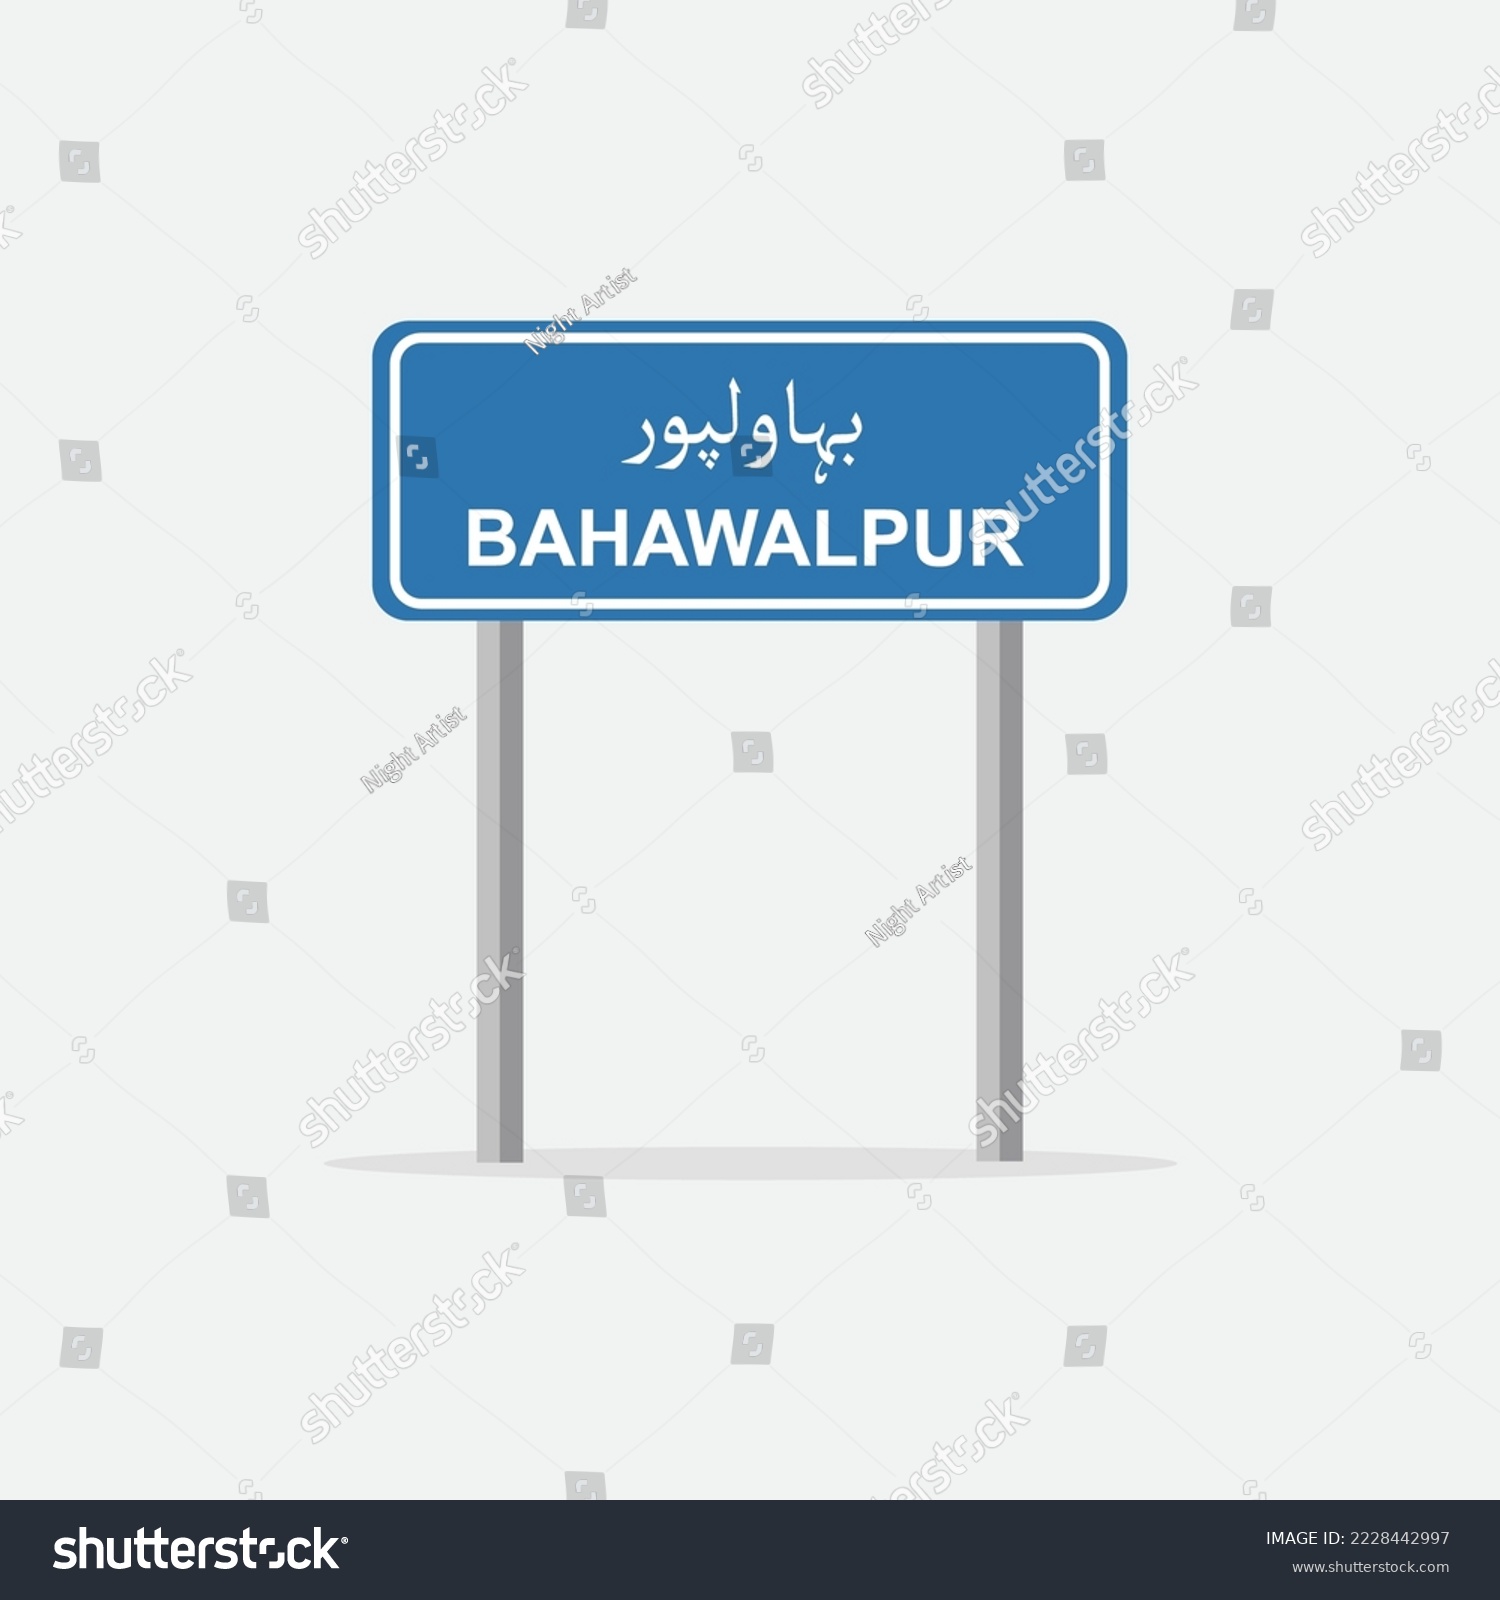 SVG of Bahawalpur road sign board vector illustration. Bahawalpur city name written in Urdu language svg